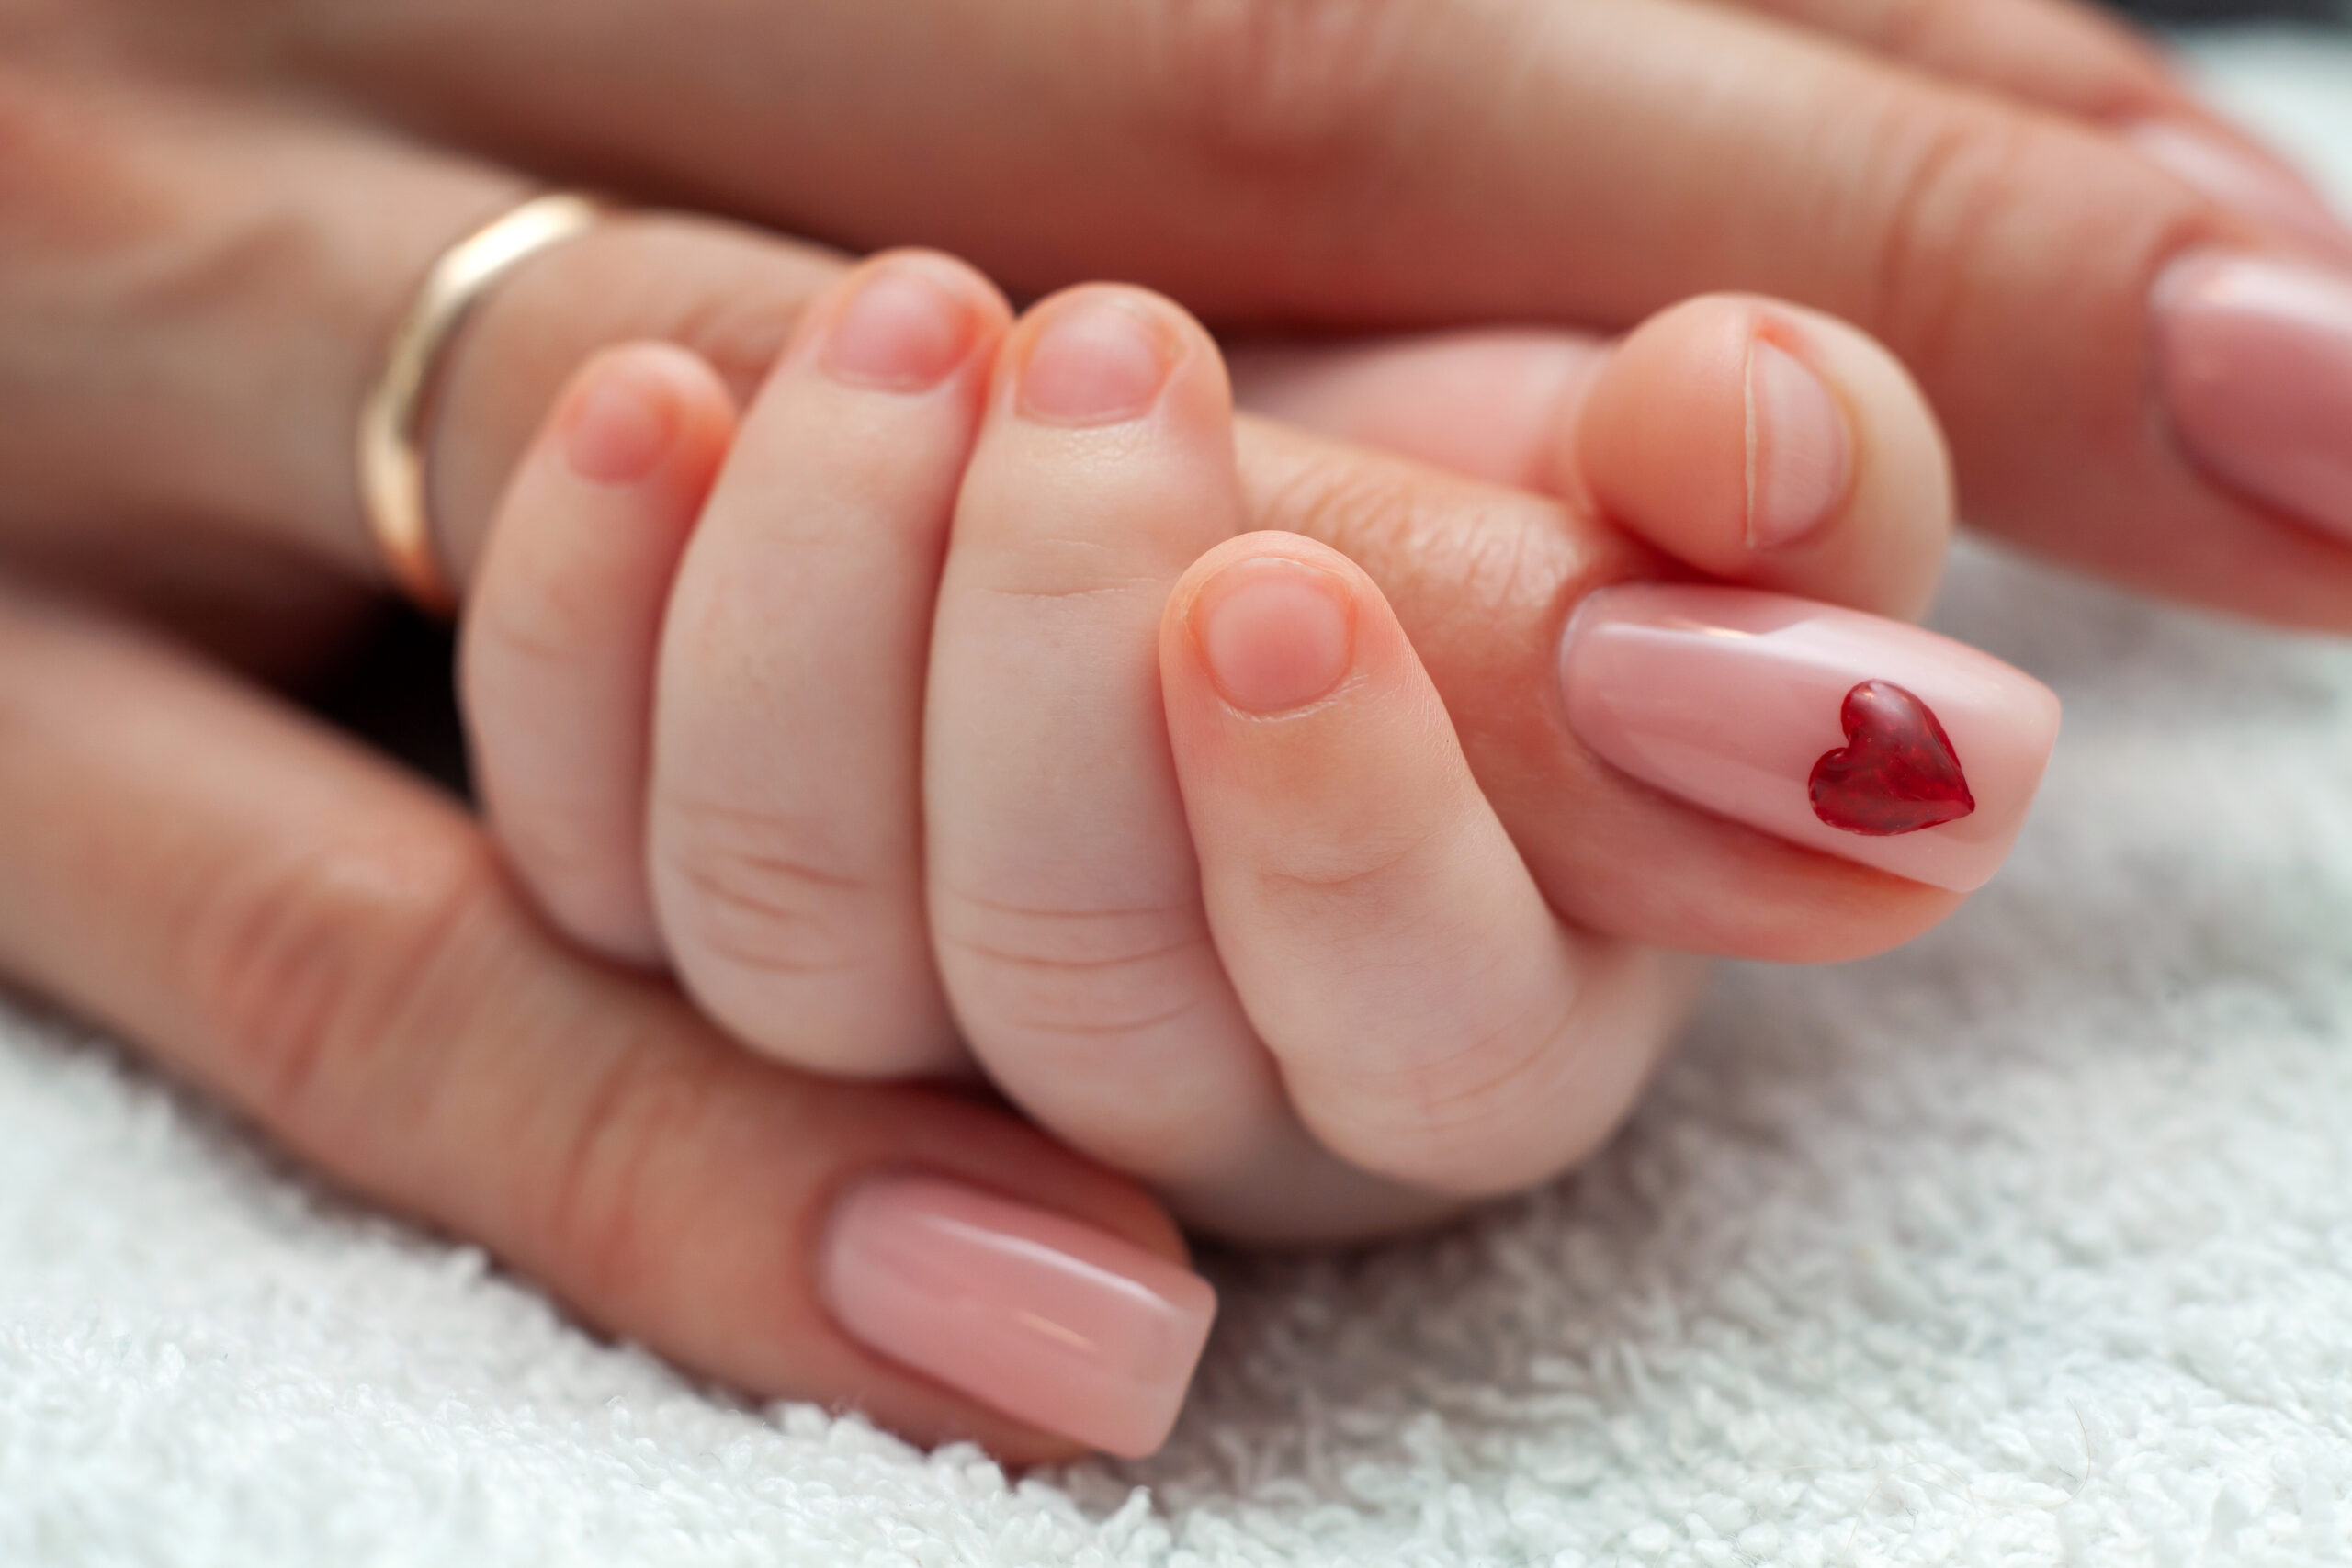 Infant holding mommy's finger. Mum taking care of the infant baby. Heart sign on mom's nail. Family, motherhood, love concept.